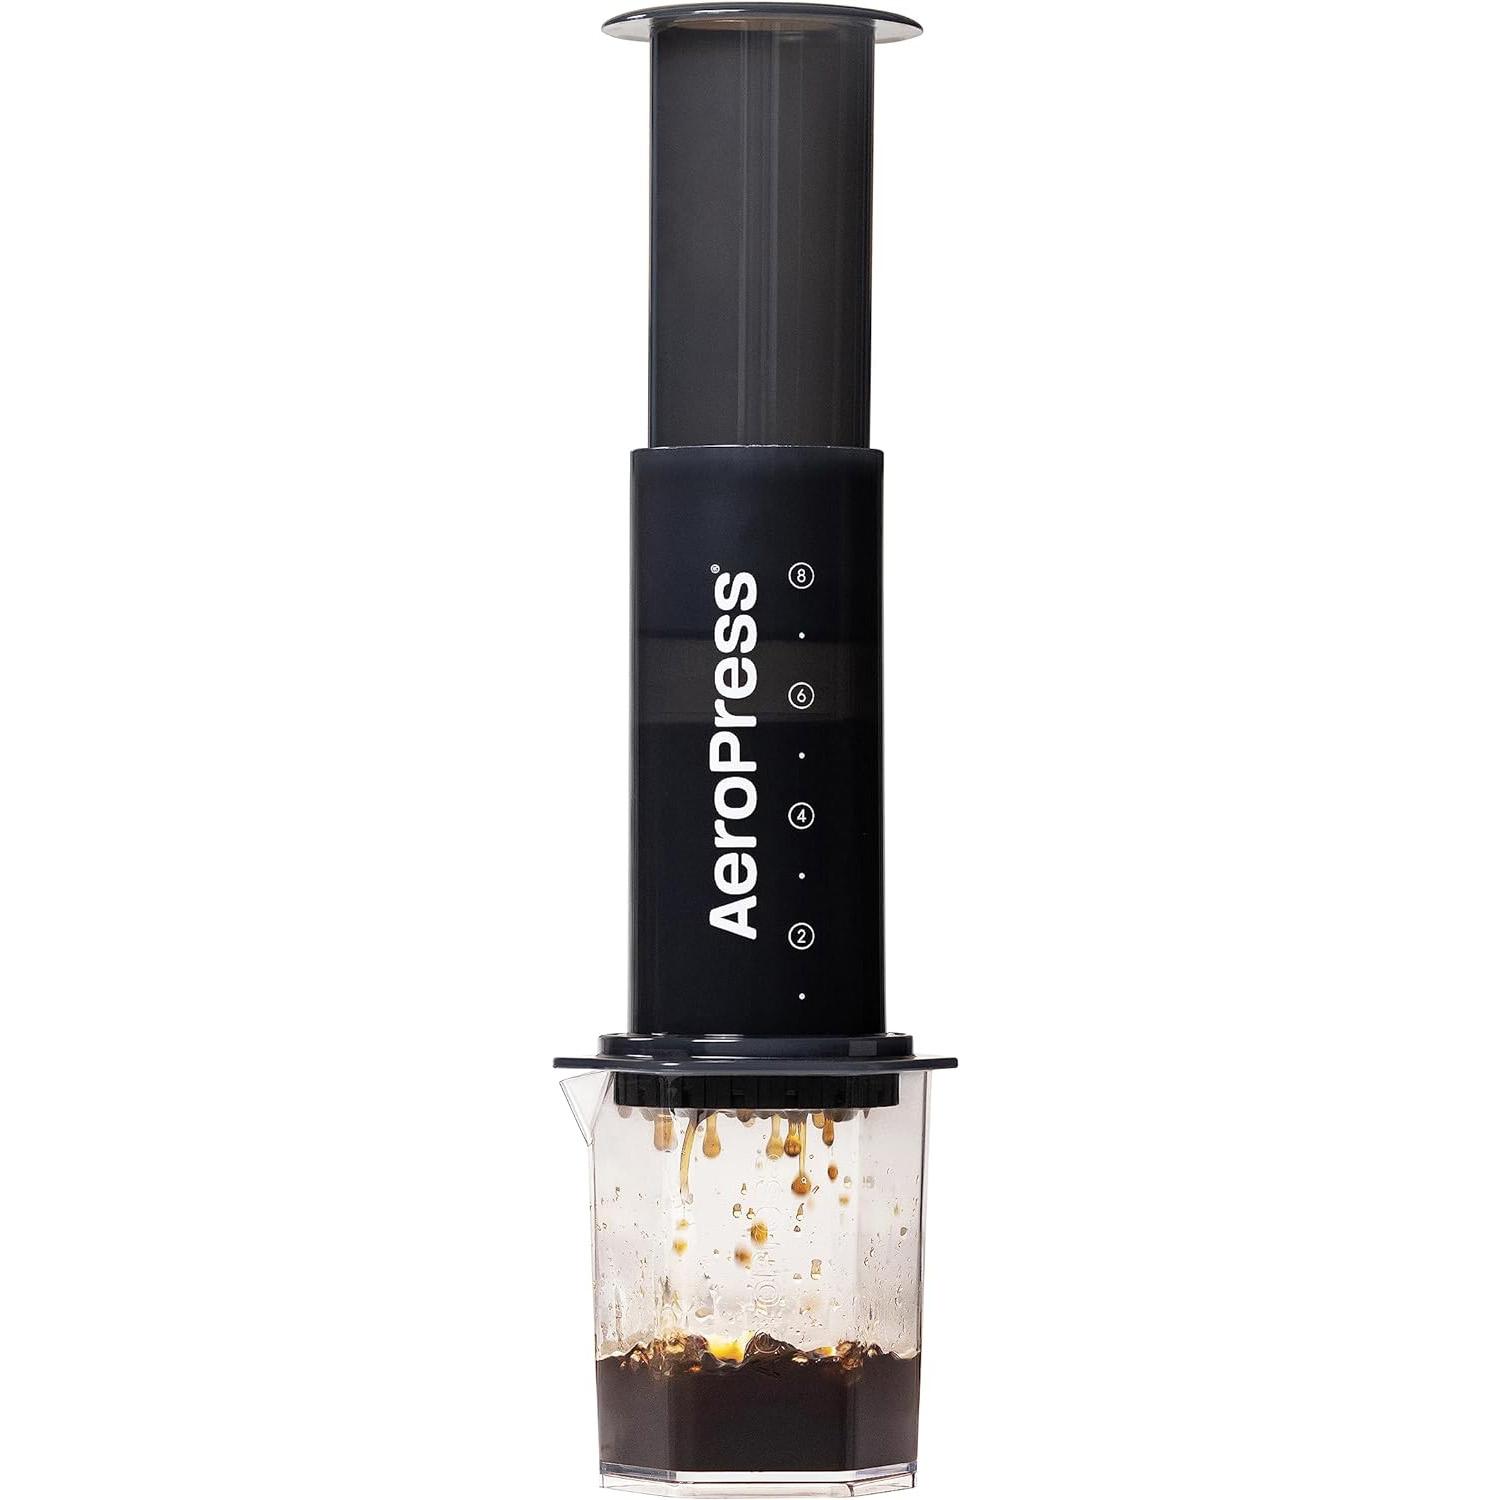 AeroPress XL Coffee Press 3 in 1 Brew Method for $48.95 Shipped